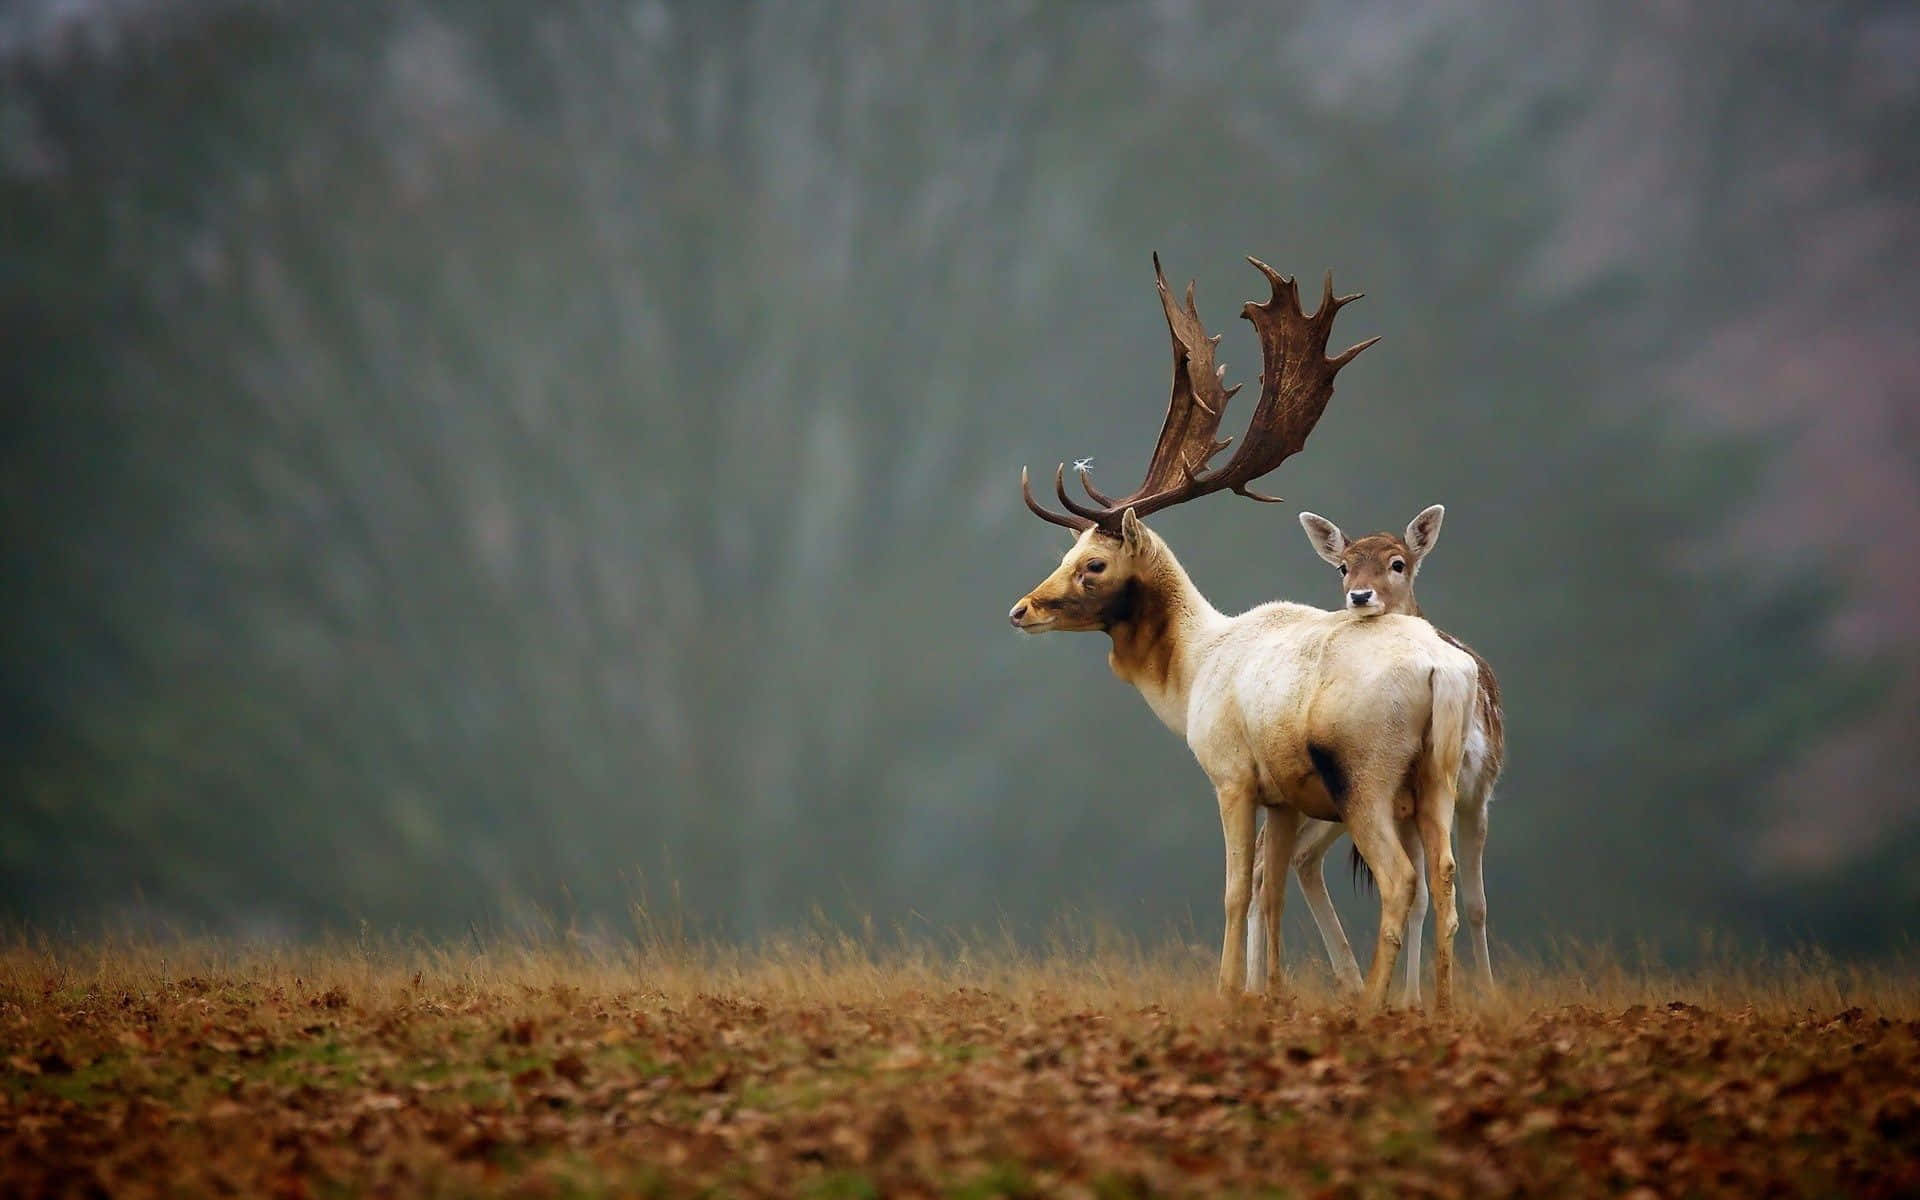 Surging Through Nature - A Cool Deer